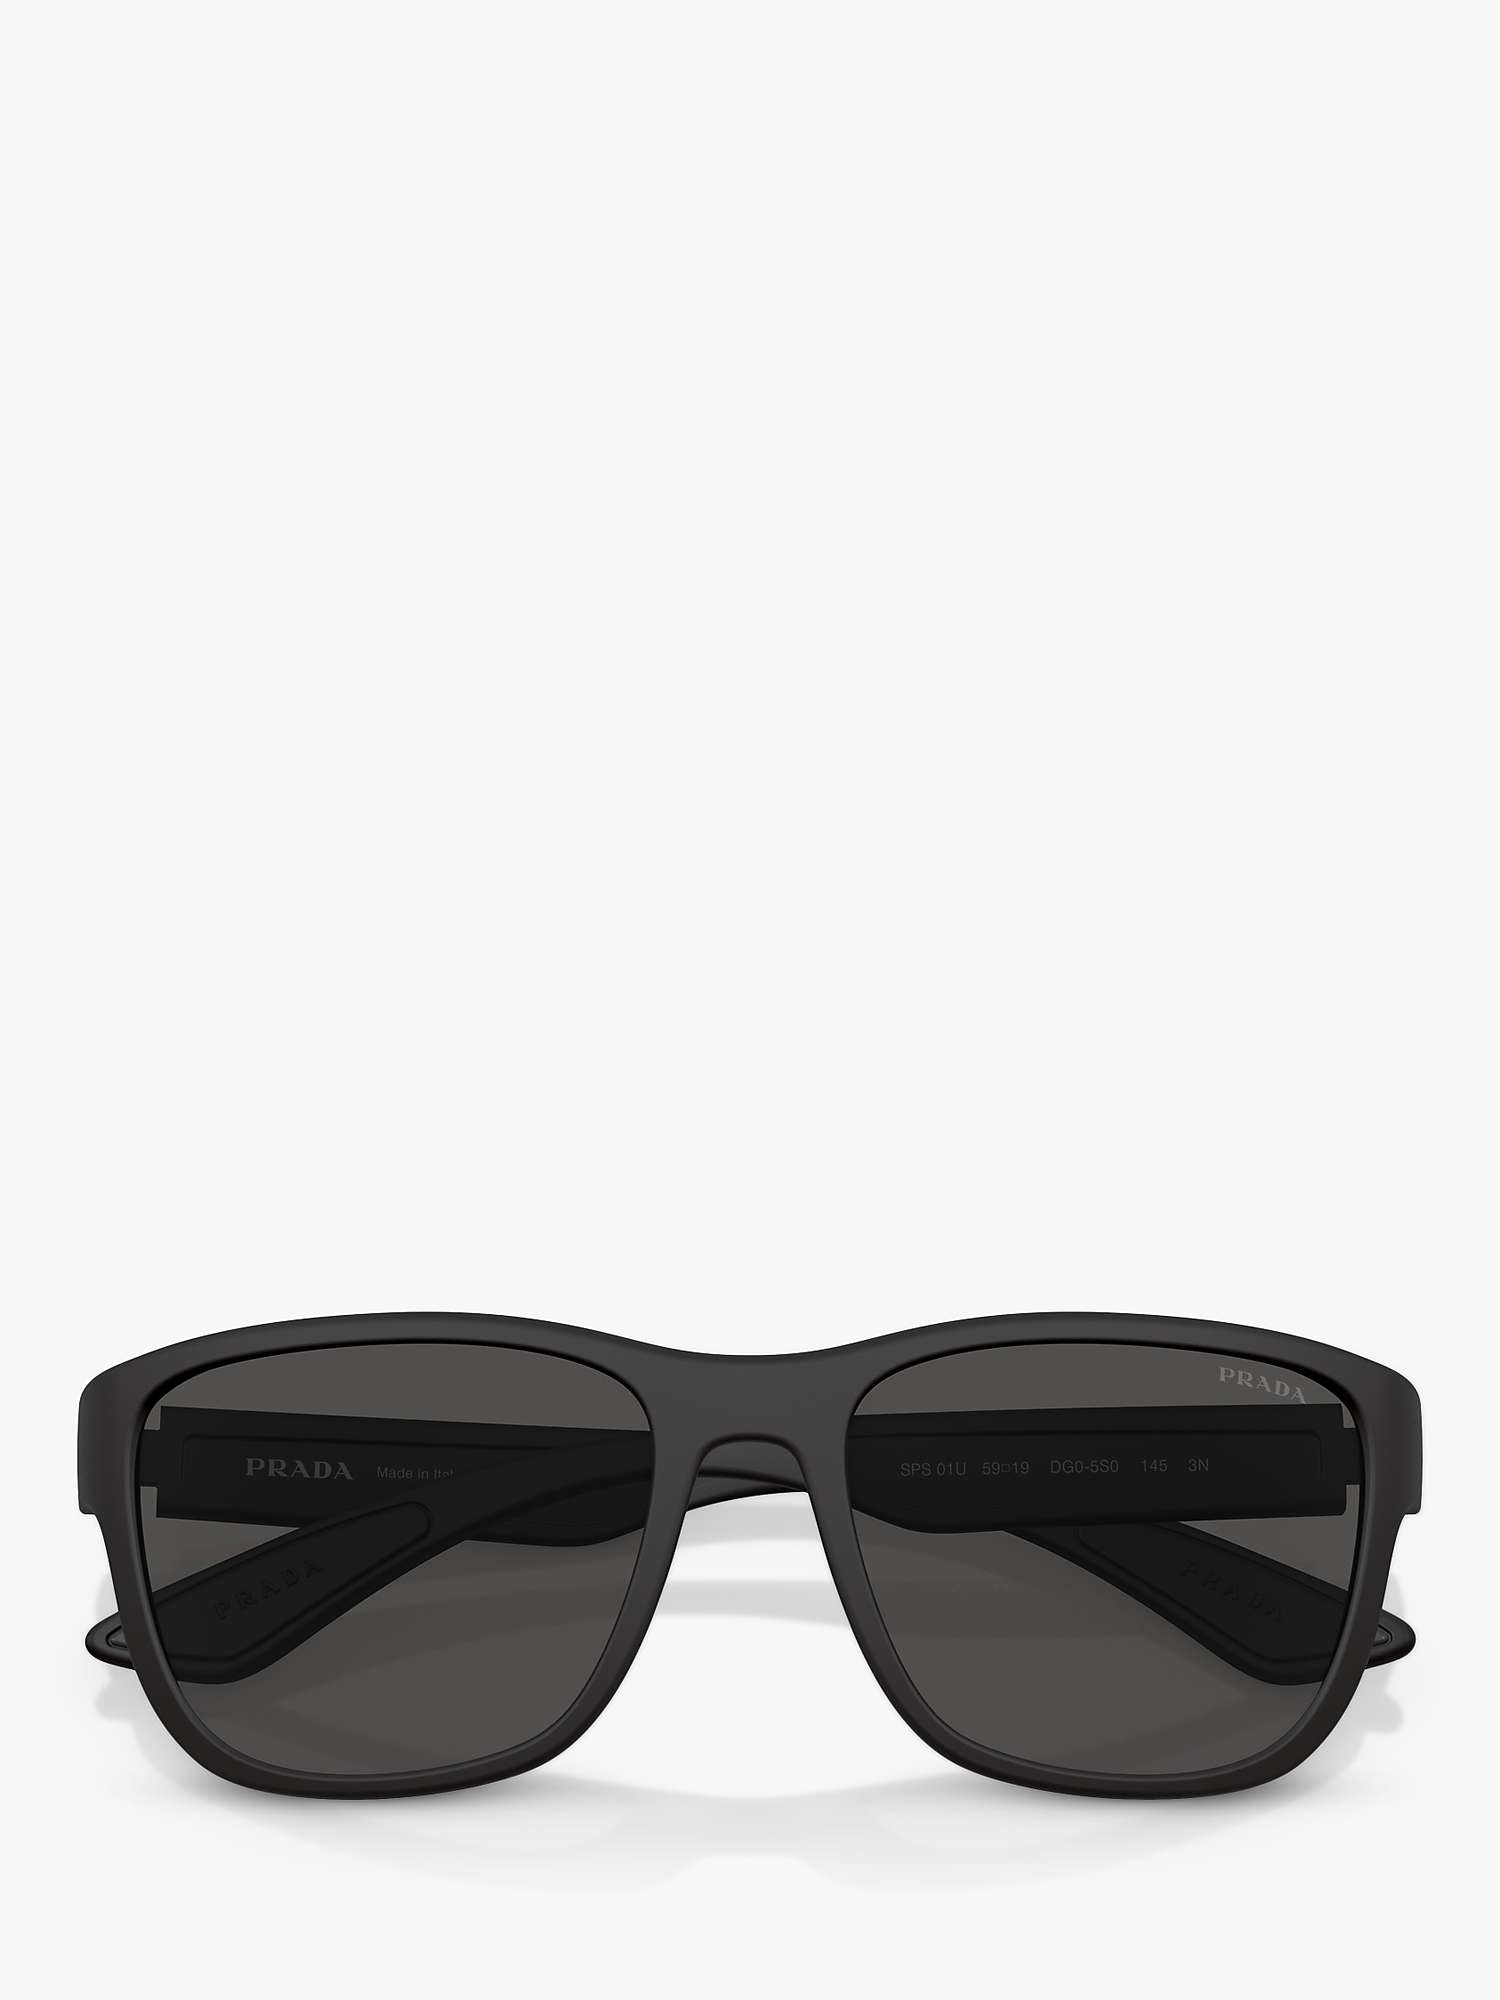 Buy Prada PS 01US Men's Active D-Shape Sunglasses, Black Online at johnlewis.com